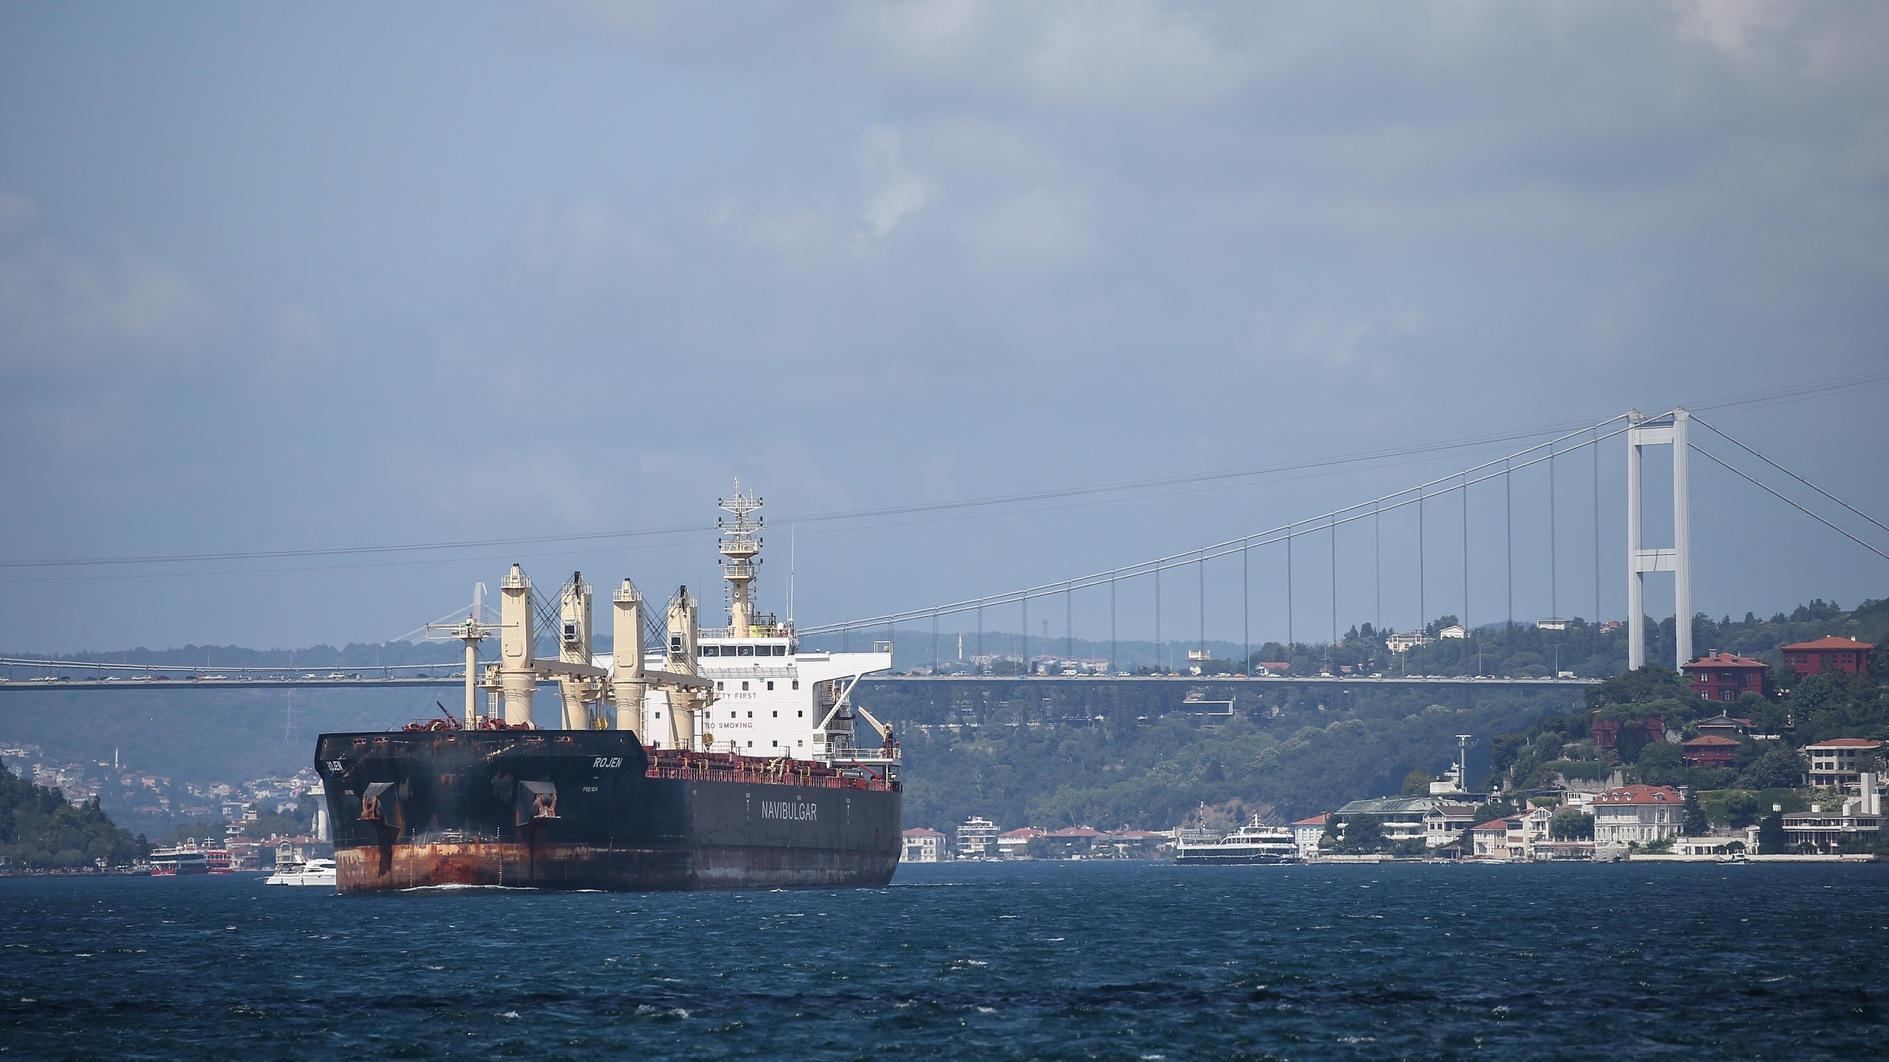 Heavy ship traffic chokes straits with air pollution